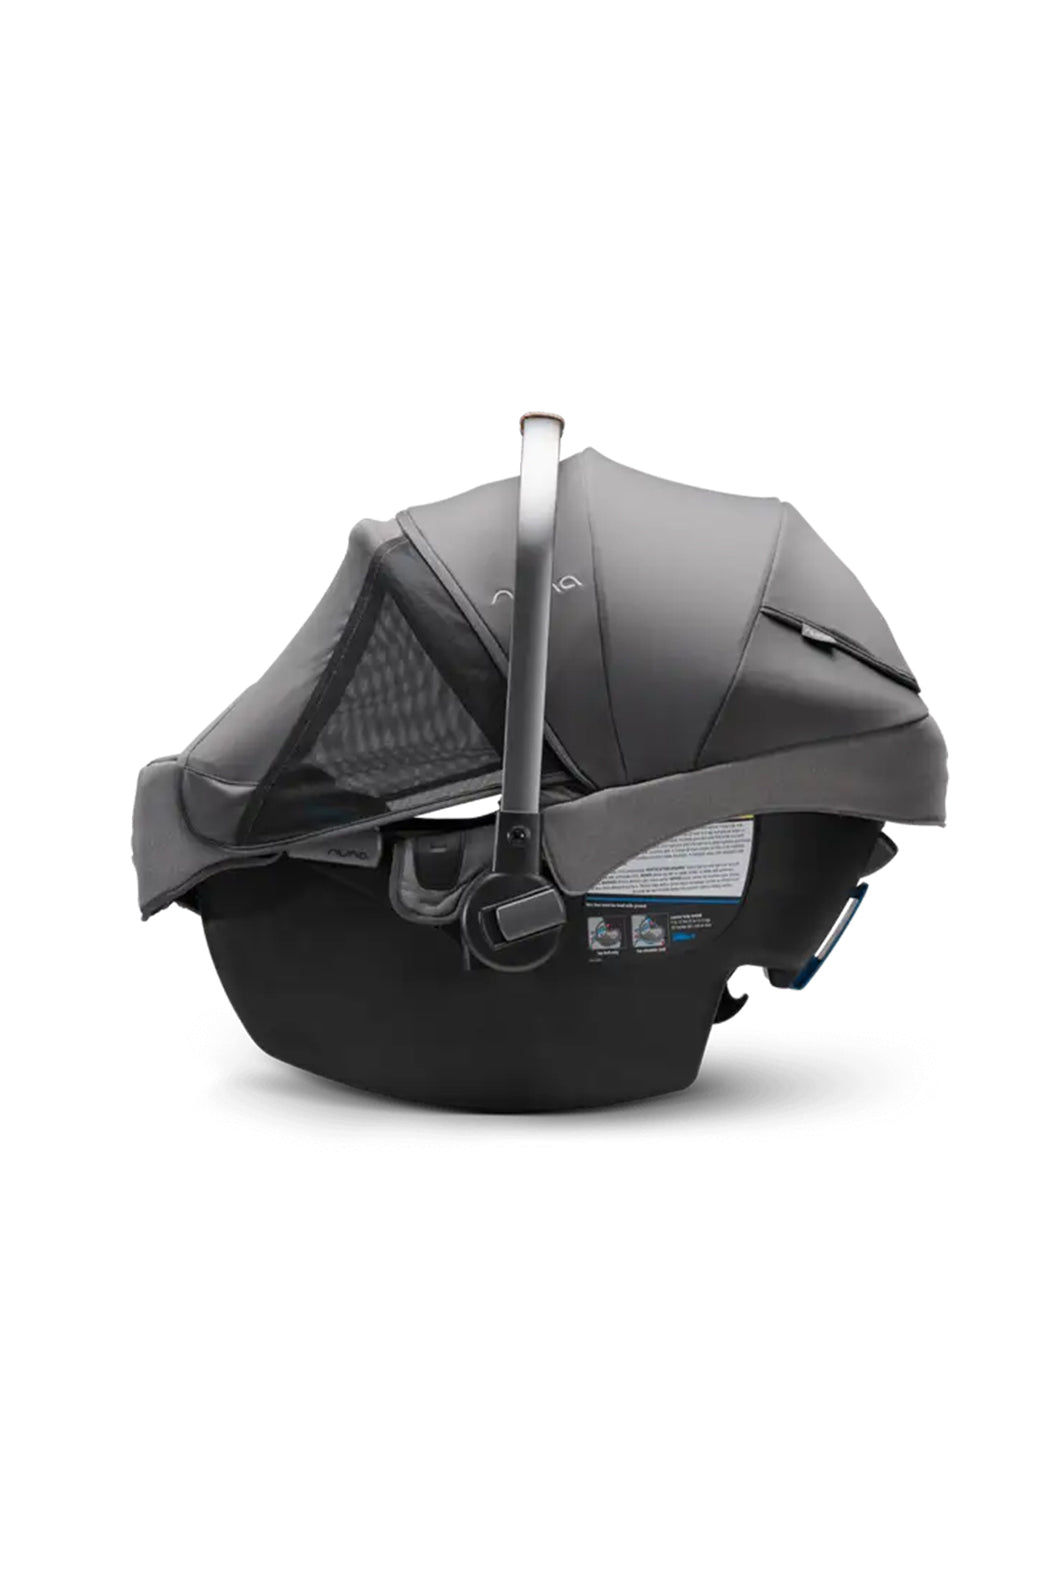 nuna MIXX Next Stroller + Pipa RX Car Seat Travel System